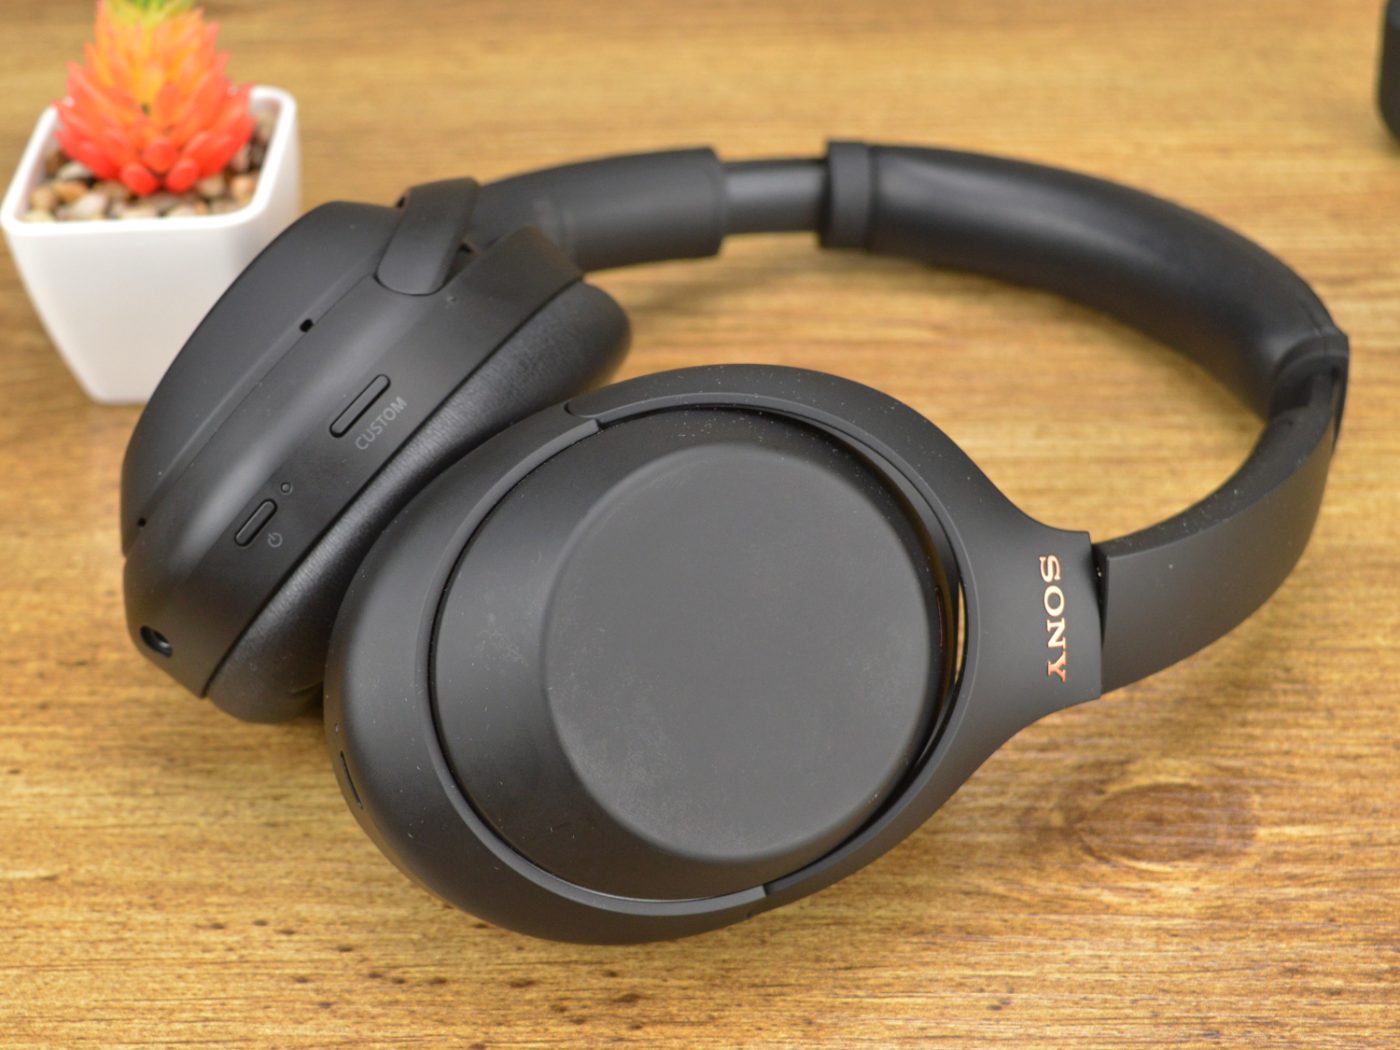 Sony WH-1000MX4 wireless headphones get new design but higher